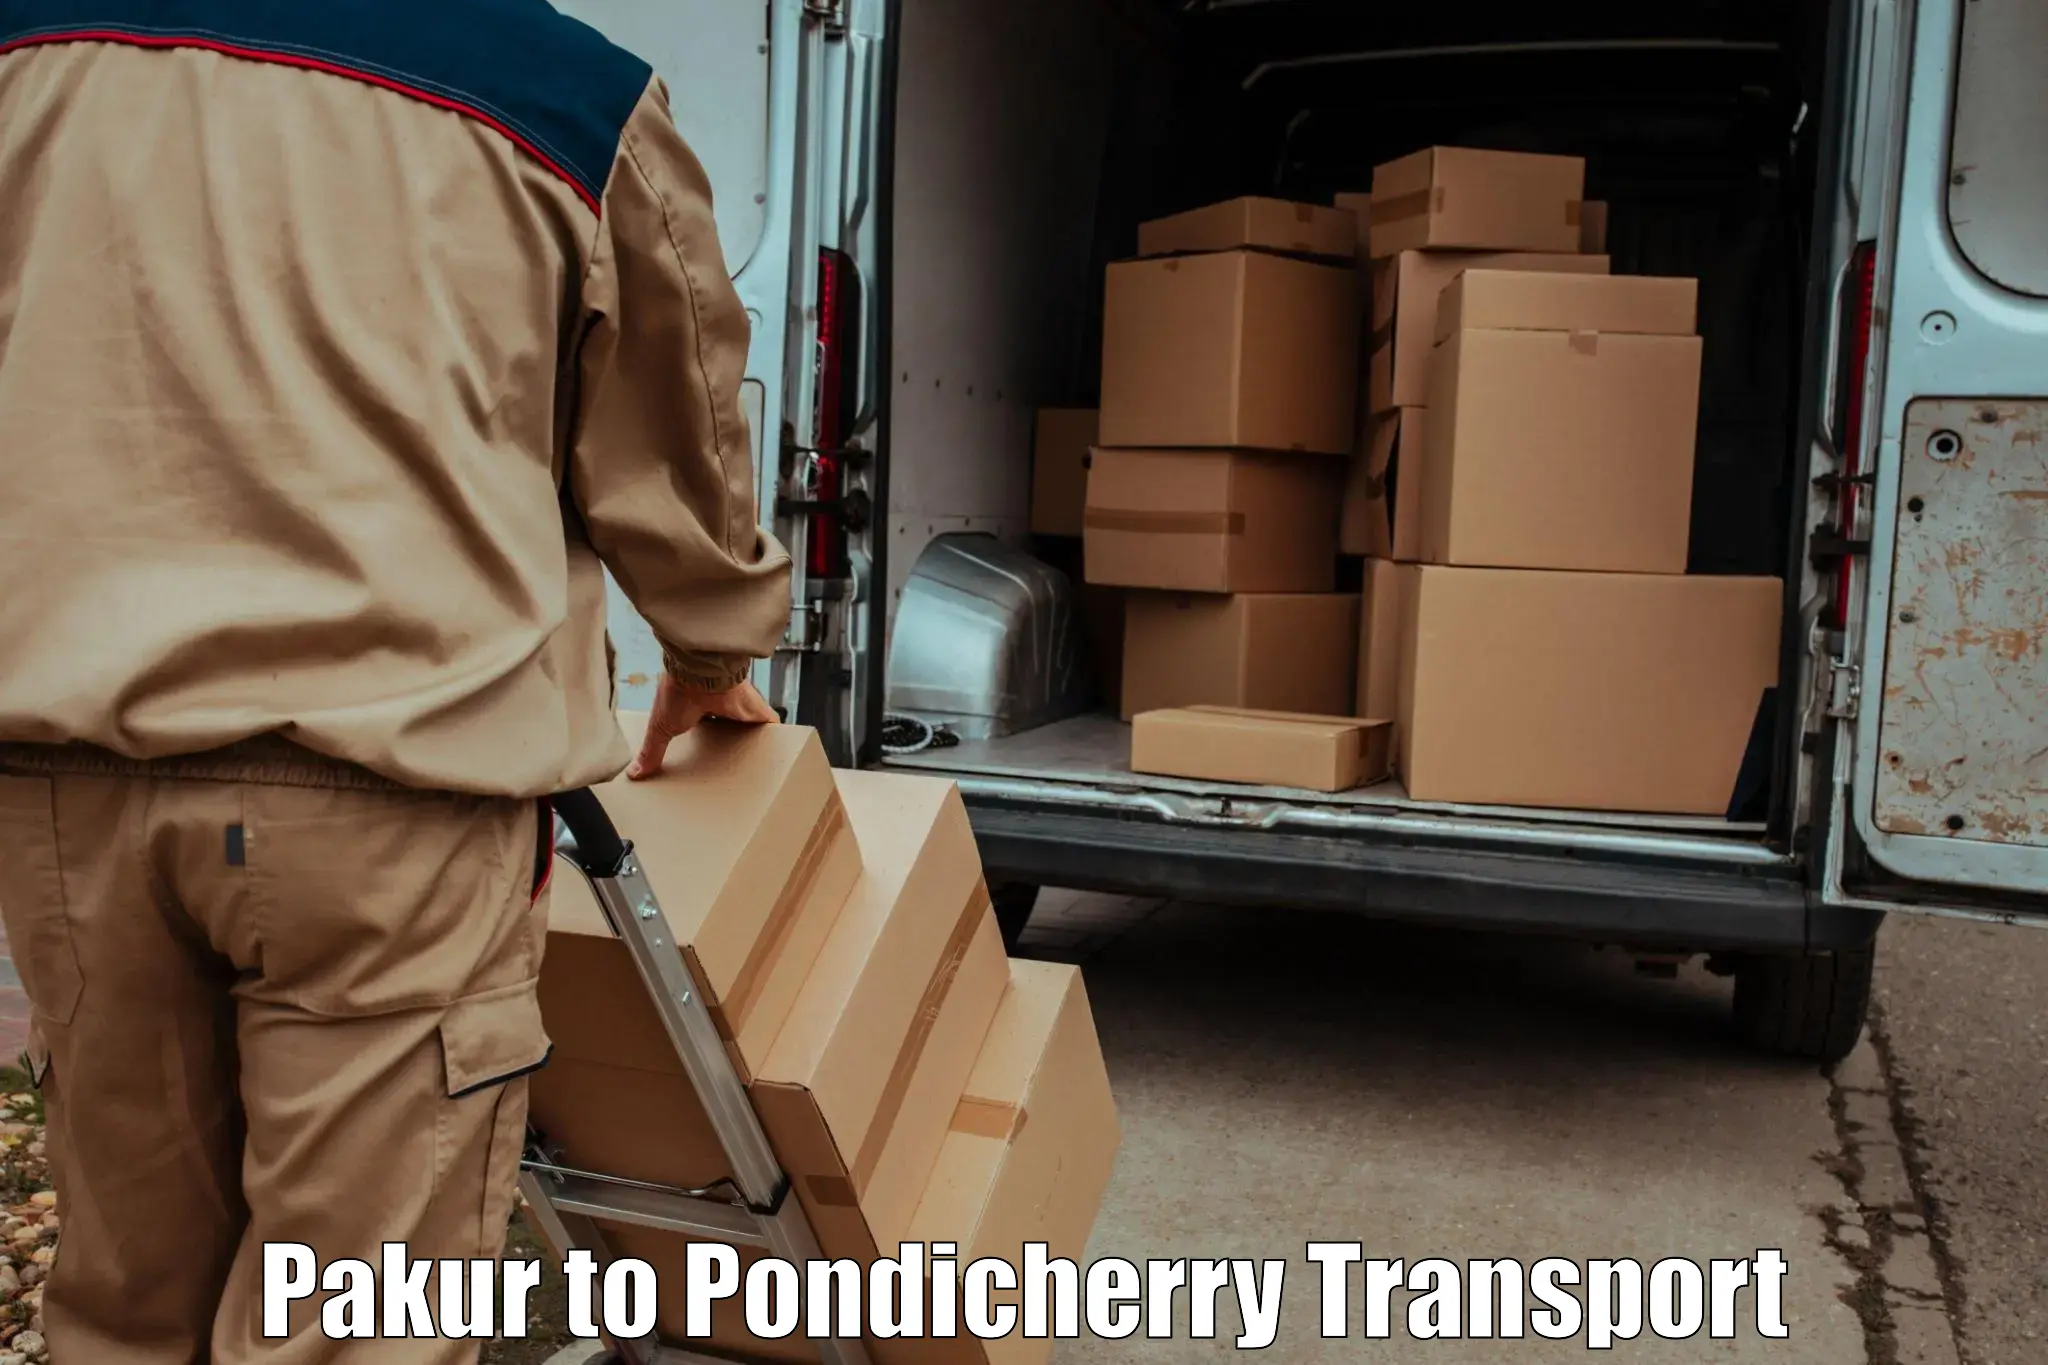 Daily transport service Pakur to Pondicherry